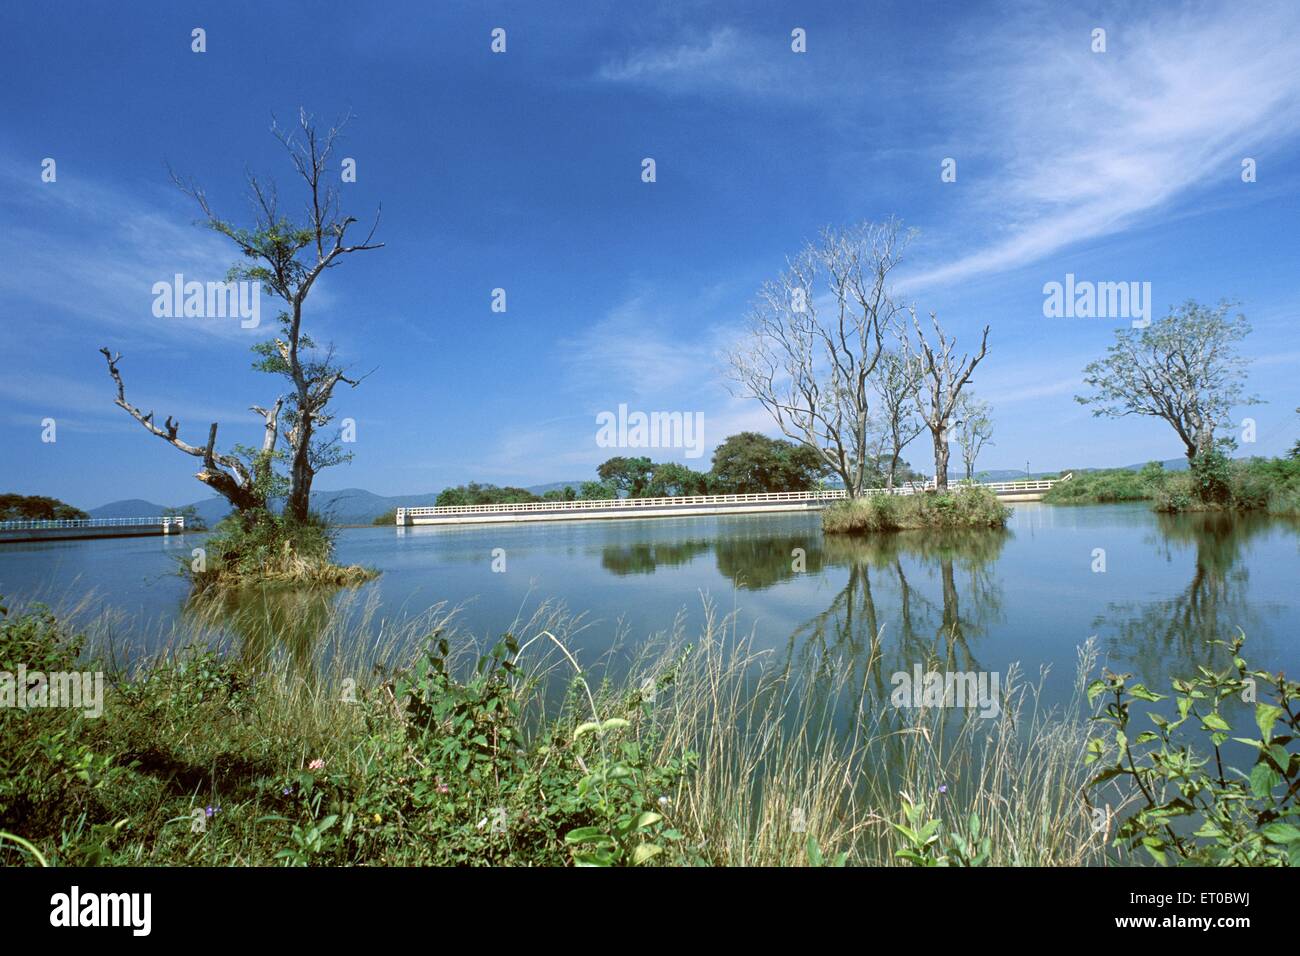 Moyar cheque presa lago, Masinagudi, Ooty, estación de la colina, Ootacamund, Udagamandalam, Udhagamandalam, colina Nilgiri, Ghat Occidental, Tamil Nadu, India, Asia Foto de stock